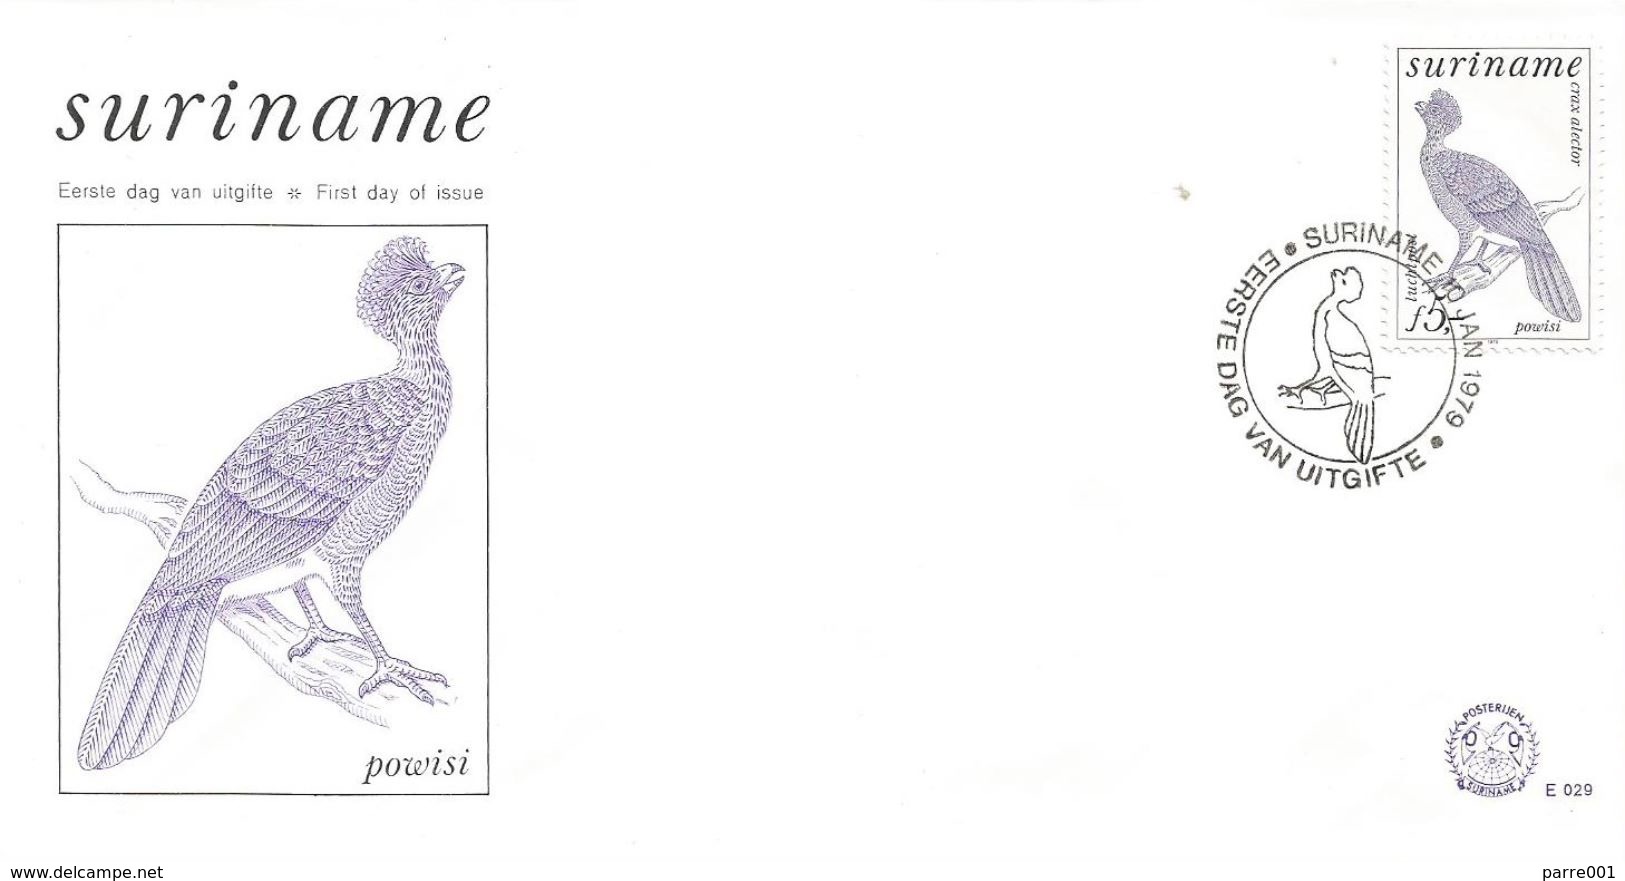 Surinam Suriname 1979 Paramaribo Crax Alector Bird FDC Cover - Cuckoos & Turacos